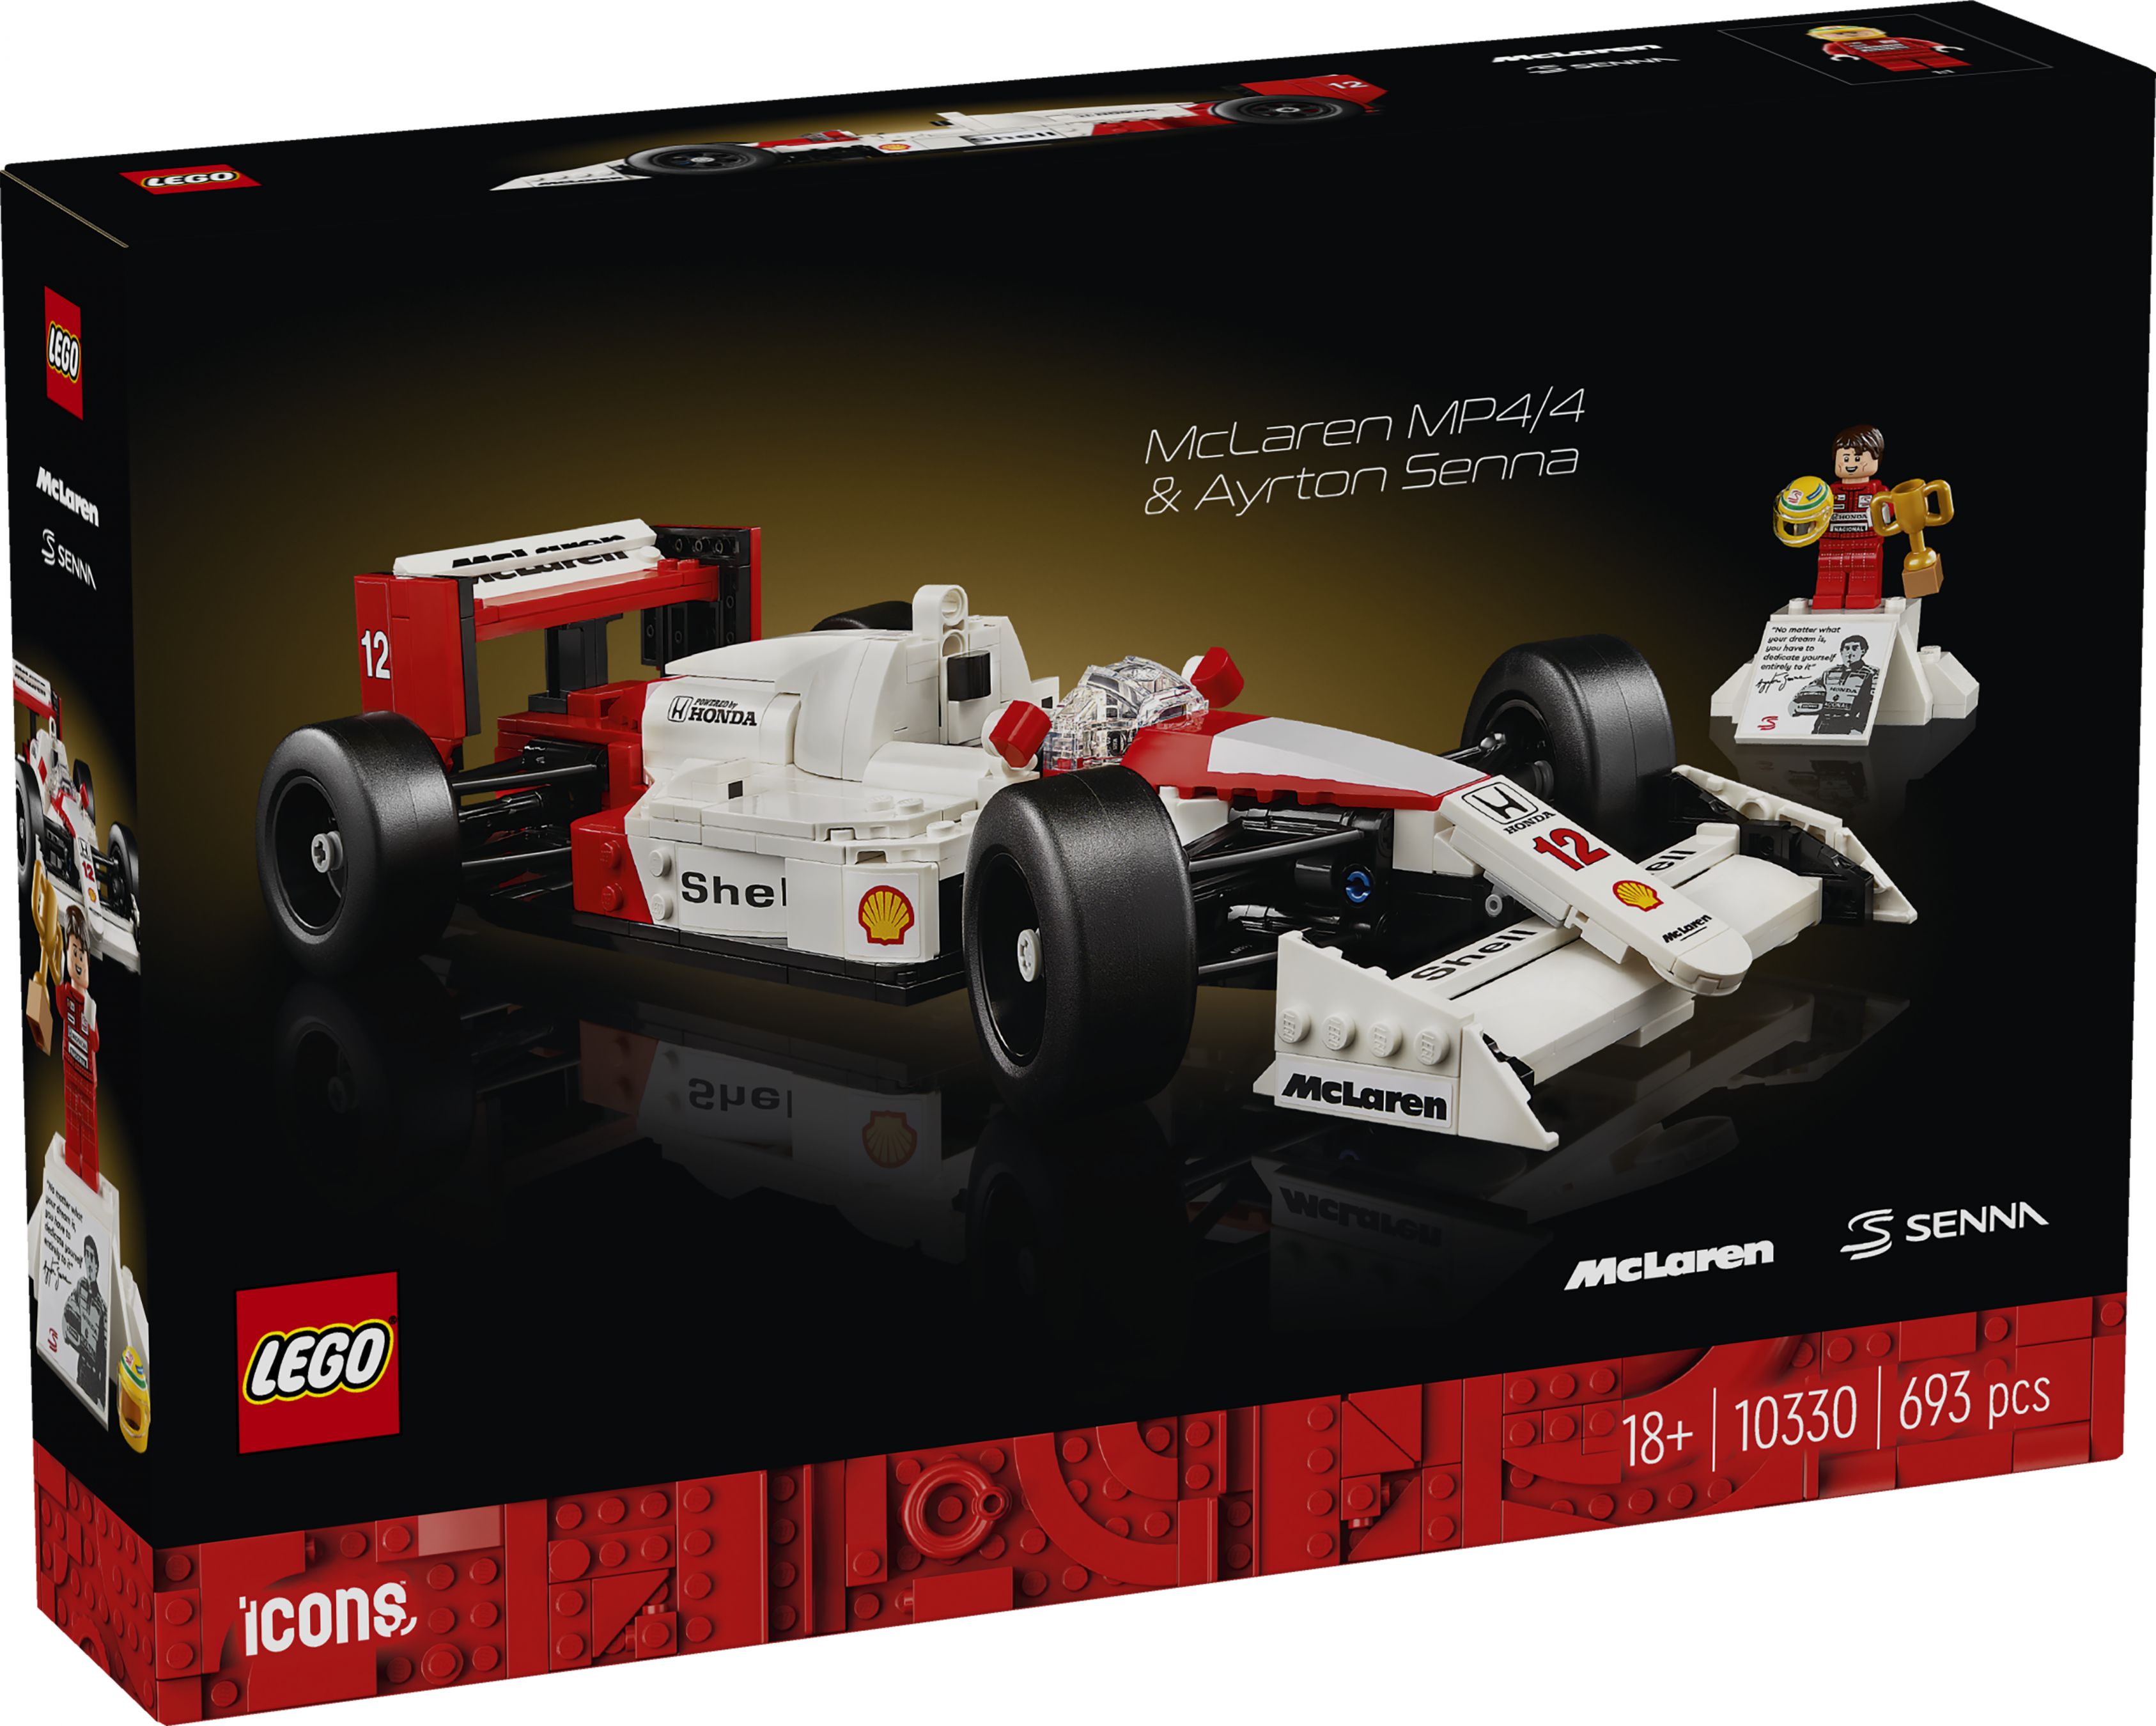 LEGO Advanced Models 10330 McLaren MP4/4 & Ayrton Senna LEGO_10330_Box1_v29.jpg